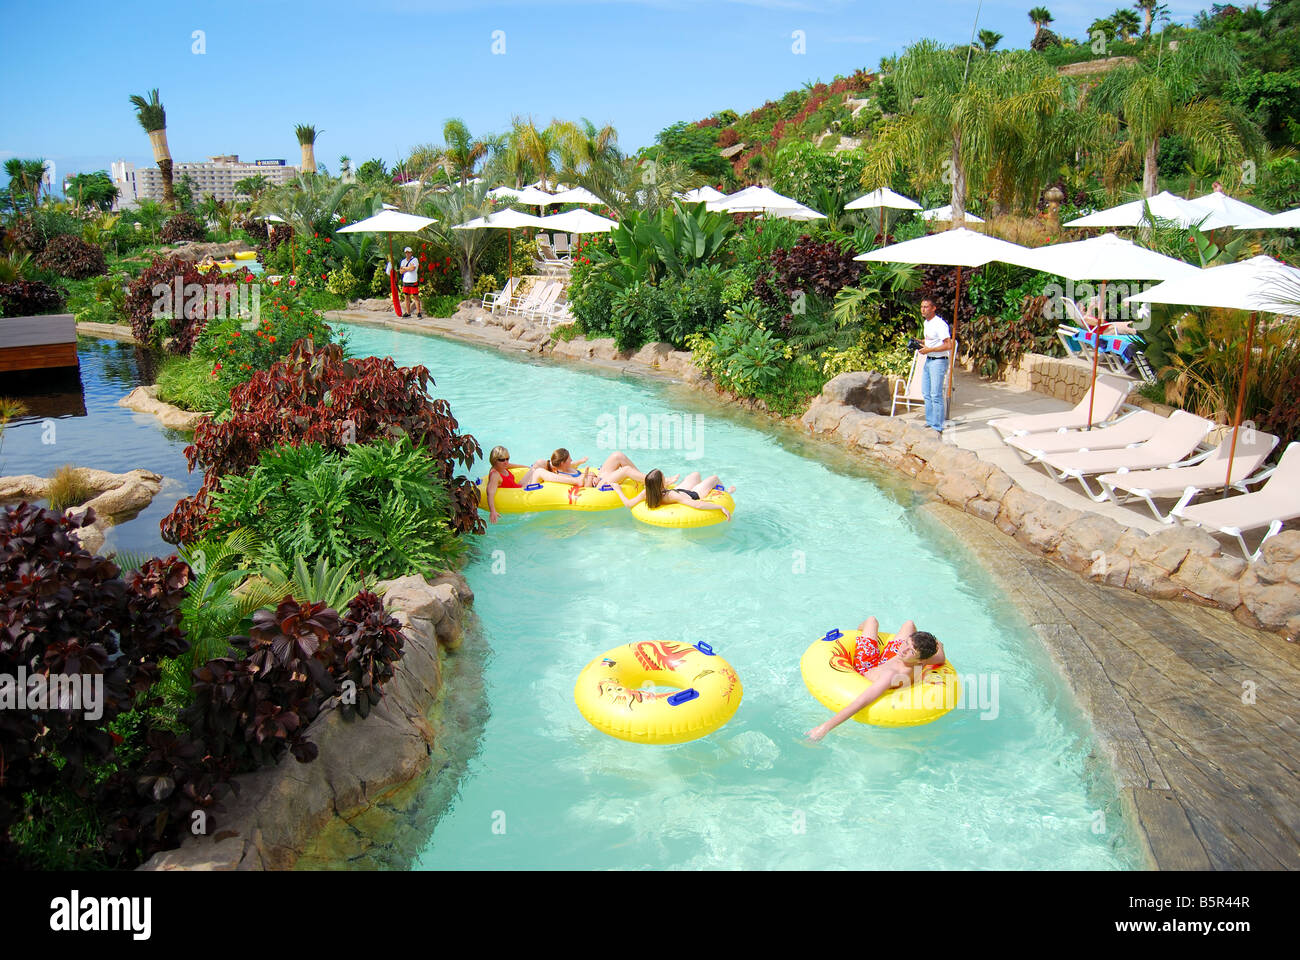 Ami fiume tailandese Ride, Siam Park Water Kingdom Theme Park, Costa Adeje, Tenerife, Isole Canarie, Spagna Foto Stock